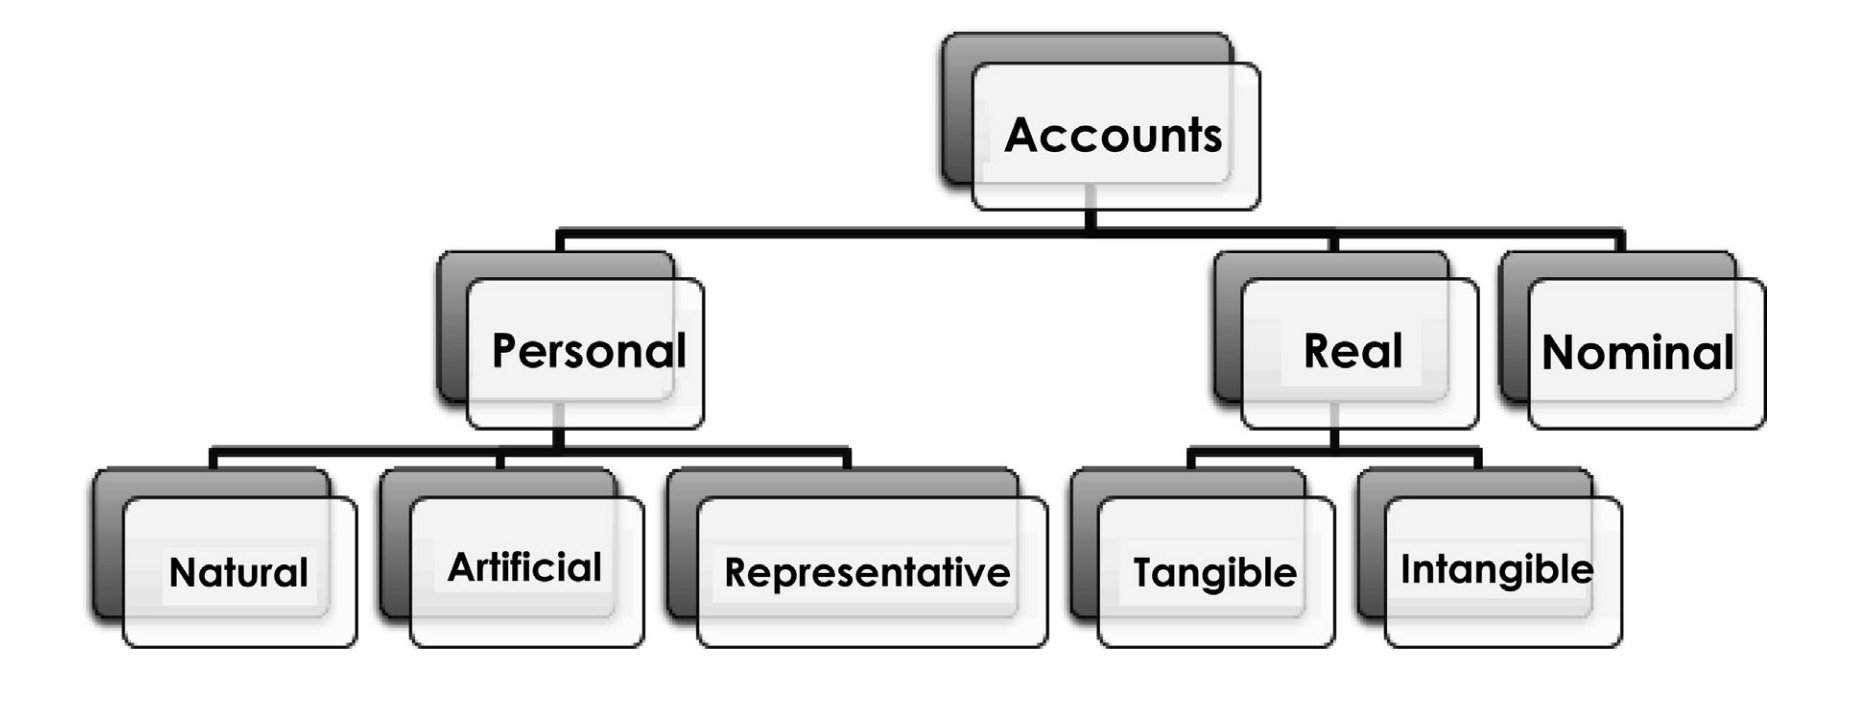 Types of accounts